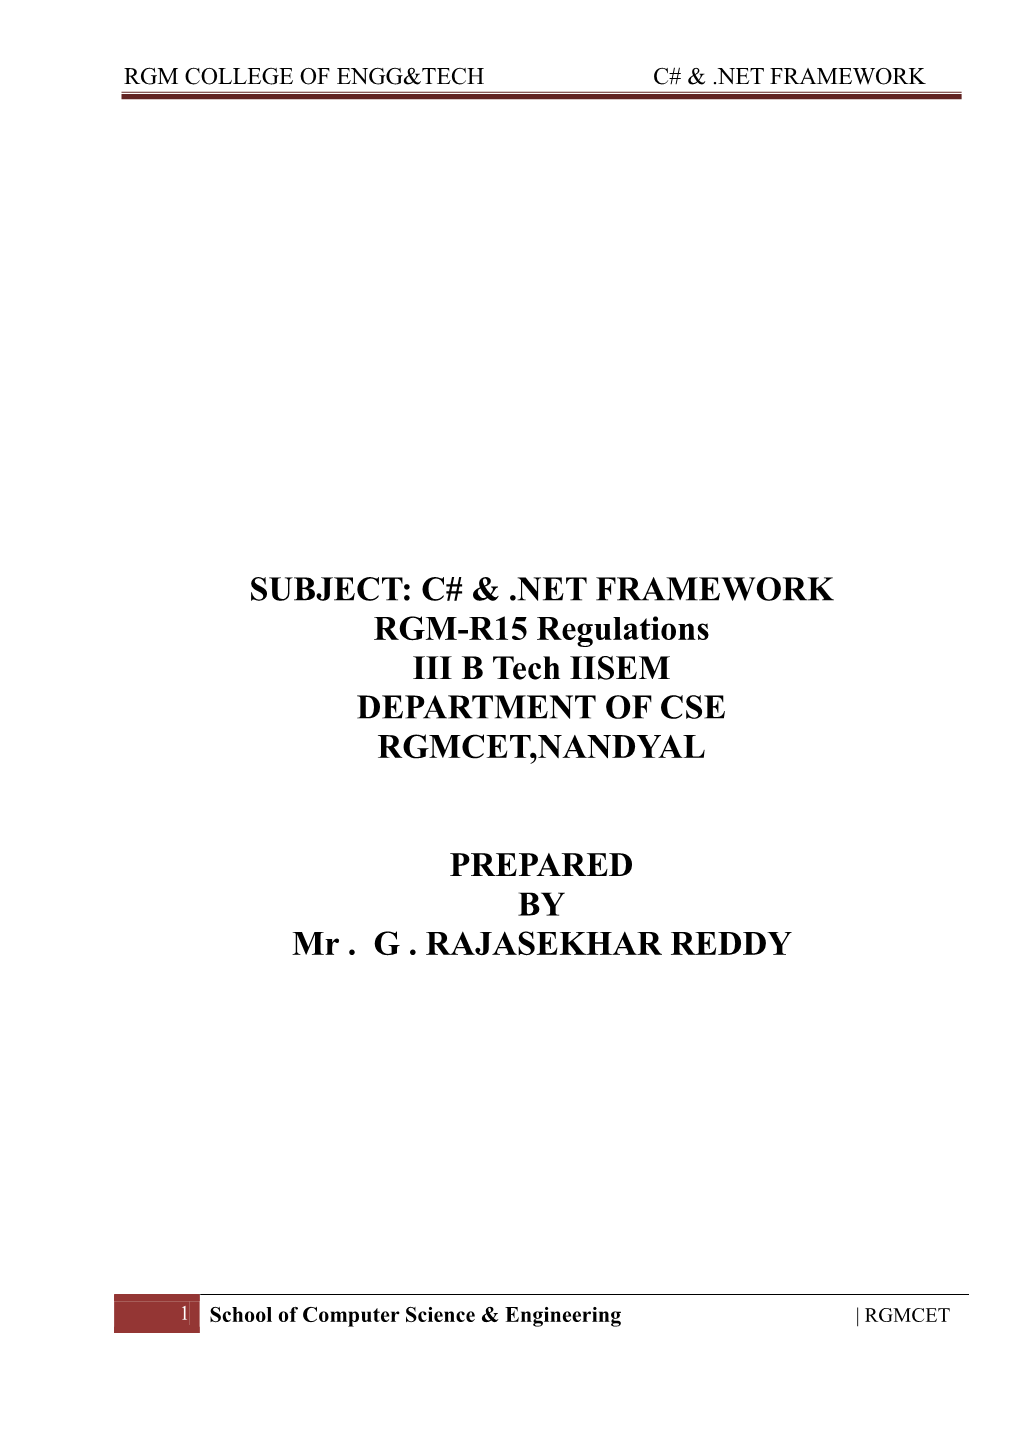 SUBJECT: C# & .NET FRAMEWORK RGM-R15 Regulations III B